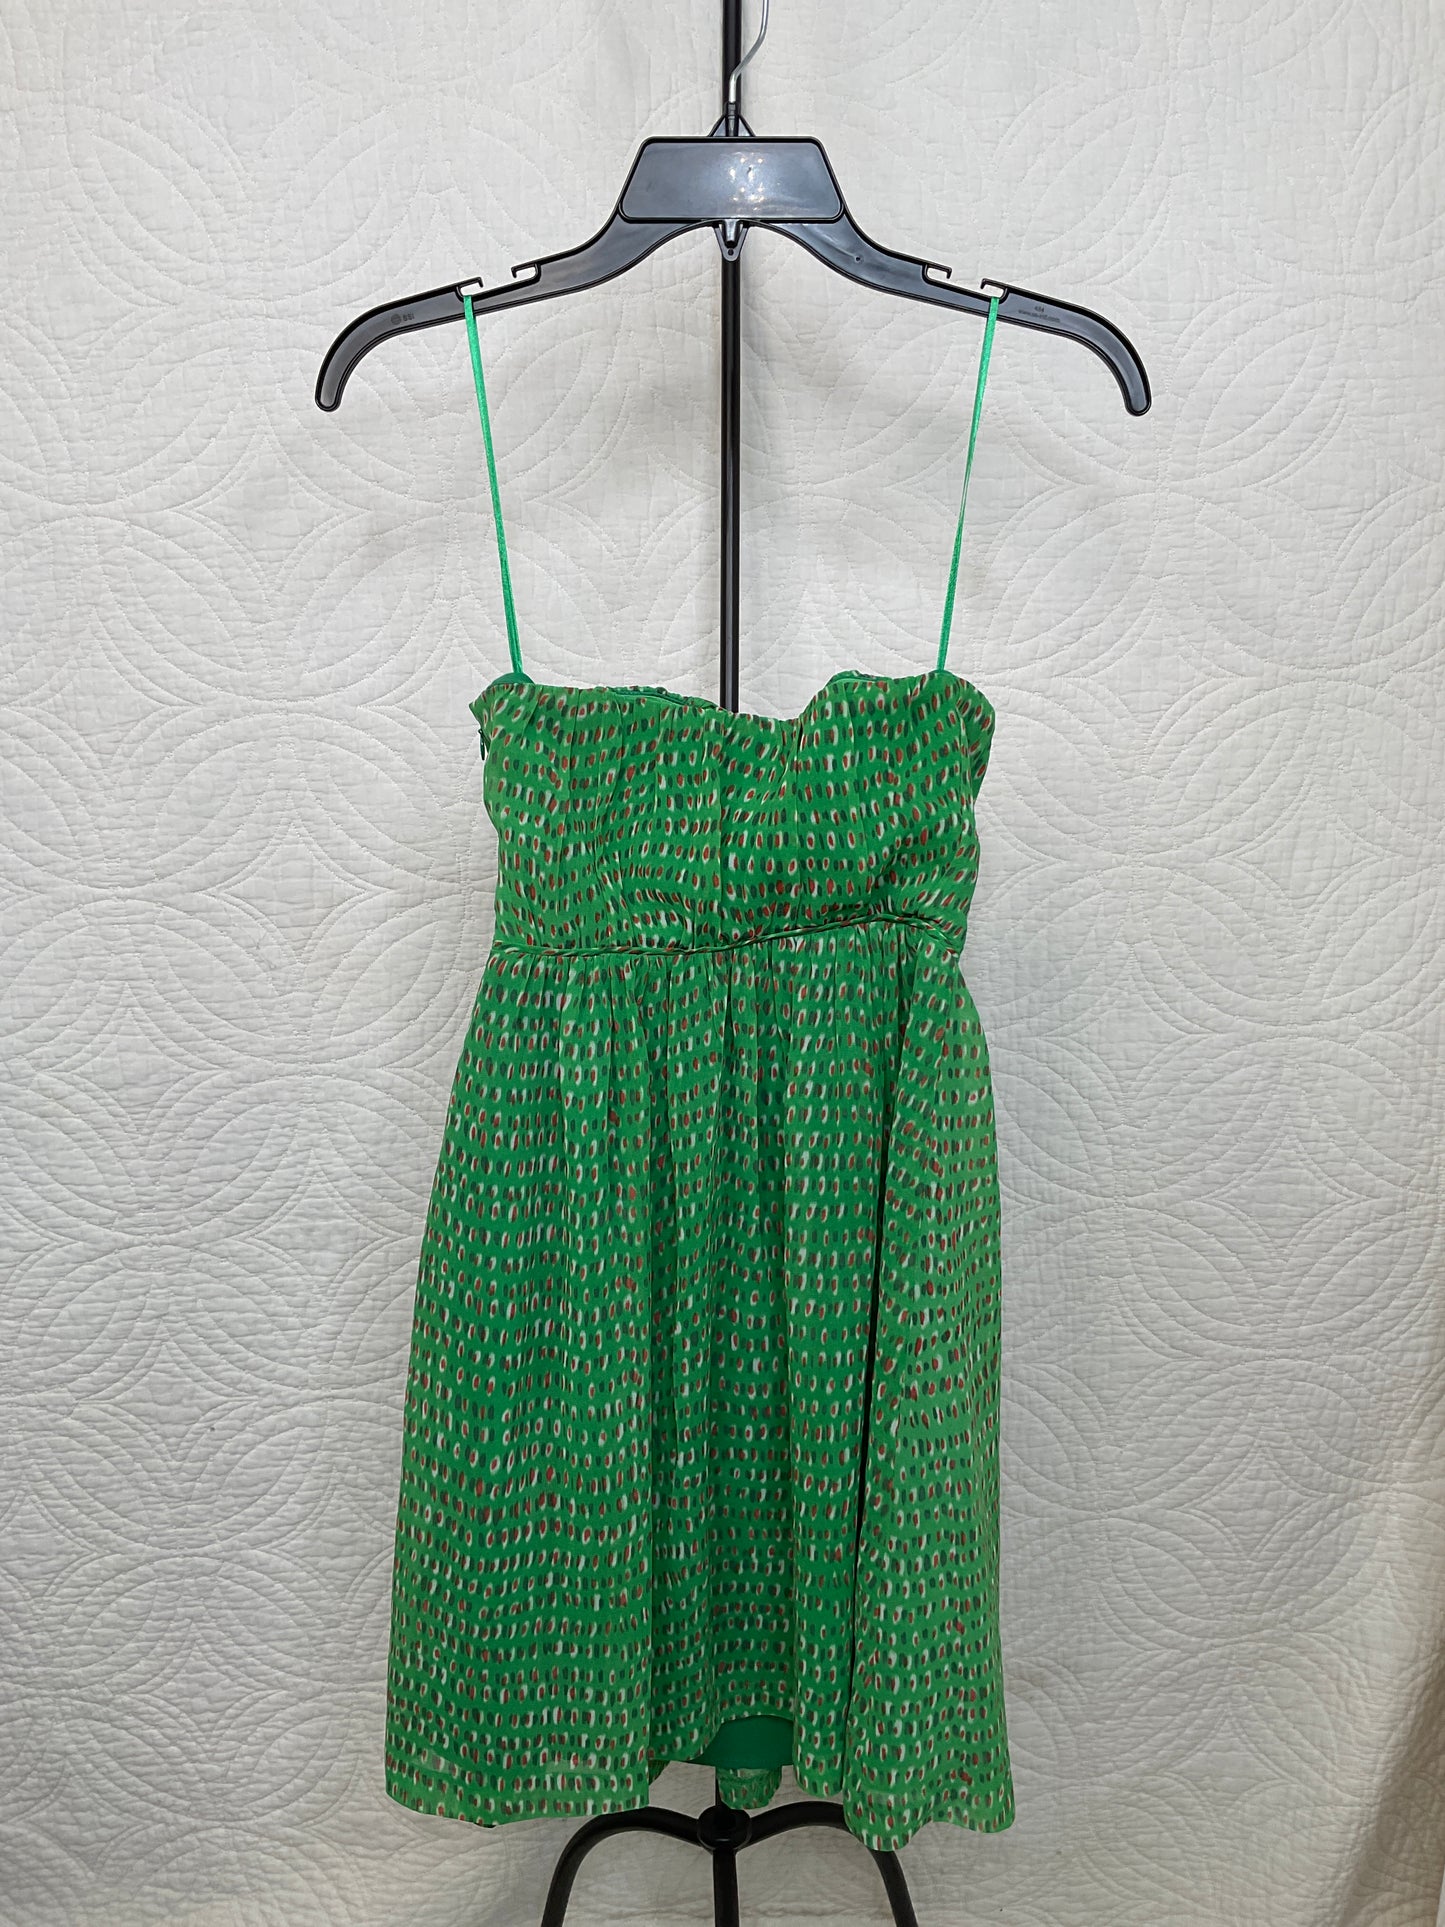 Broadway & Broome Strapless Dress, Size 0